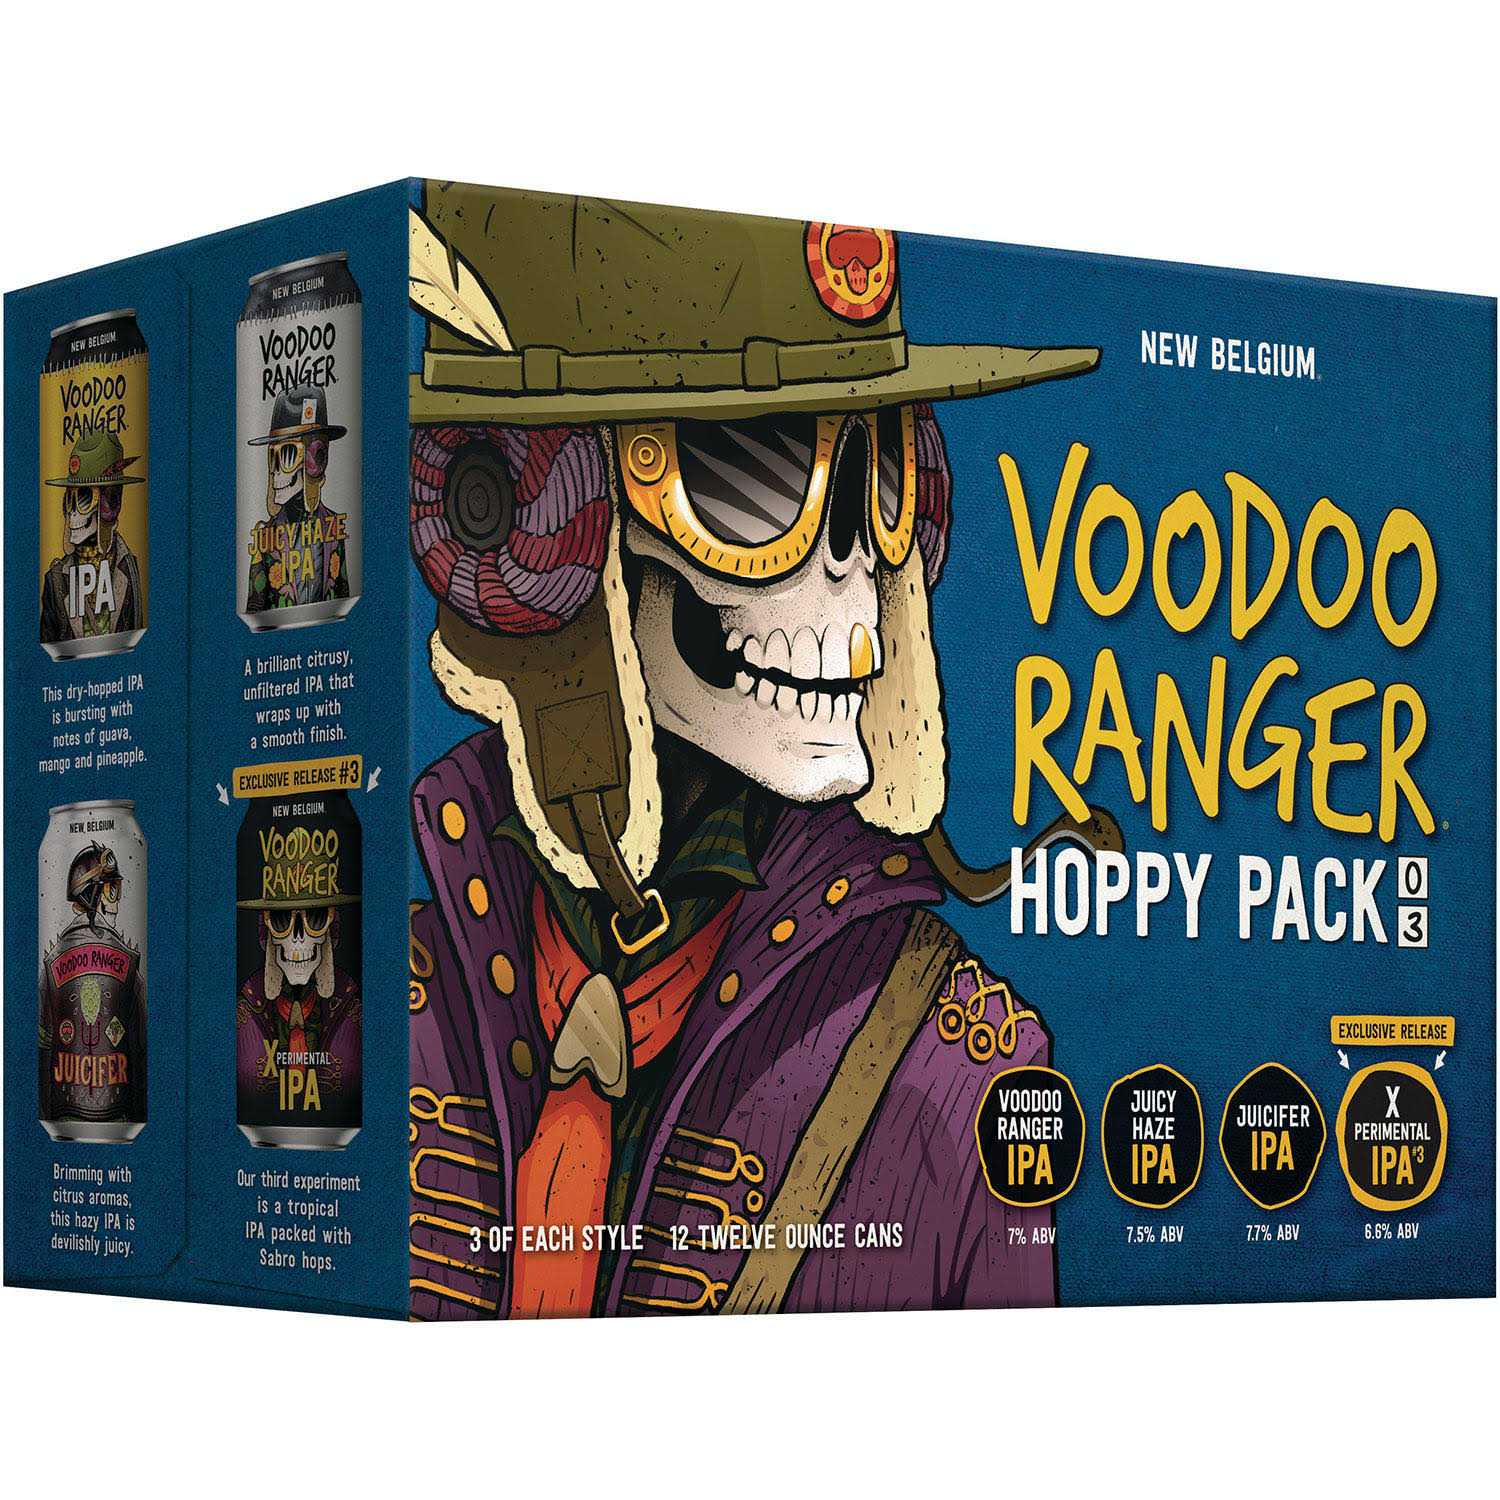 New Belgium Voodoo Ranger Beer, IPA, Hoppy Pack - 12 pack, 12 oz cans